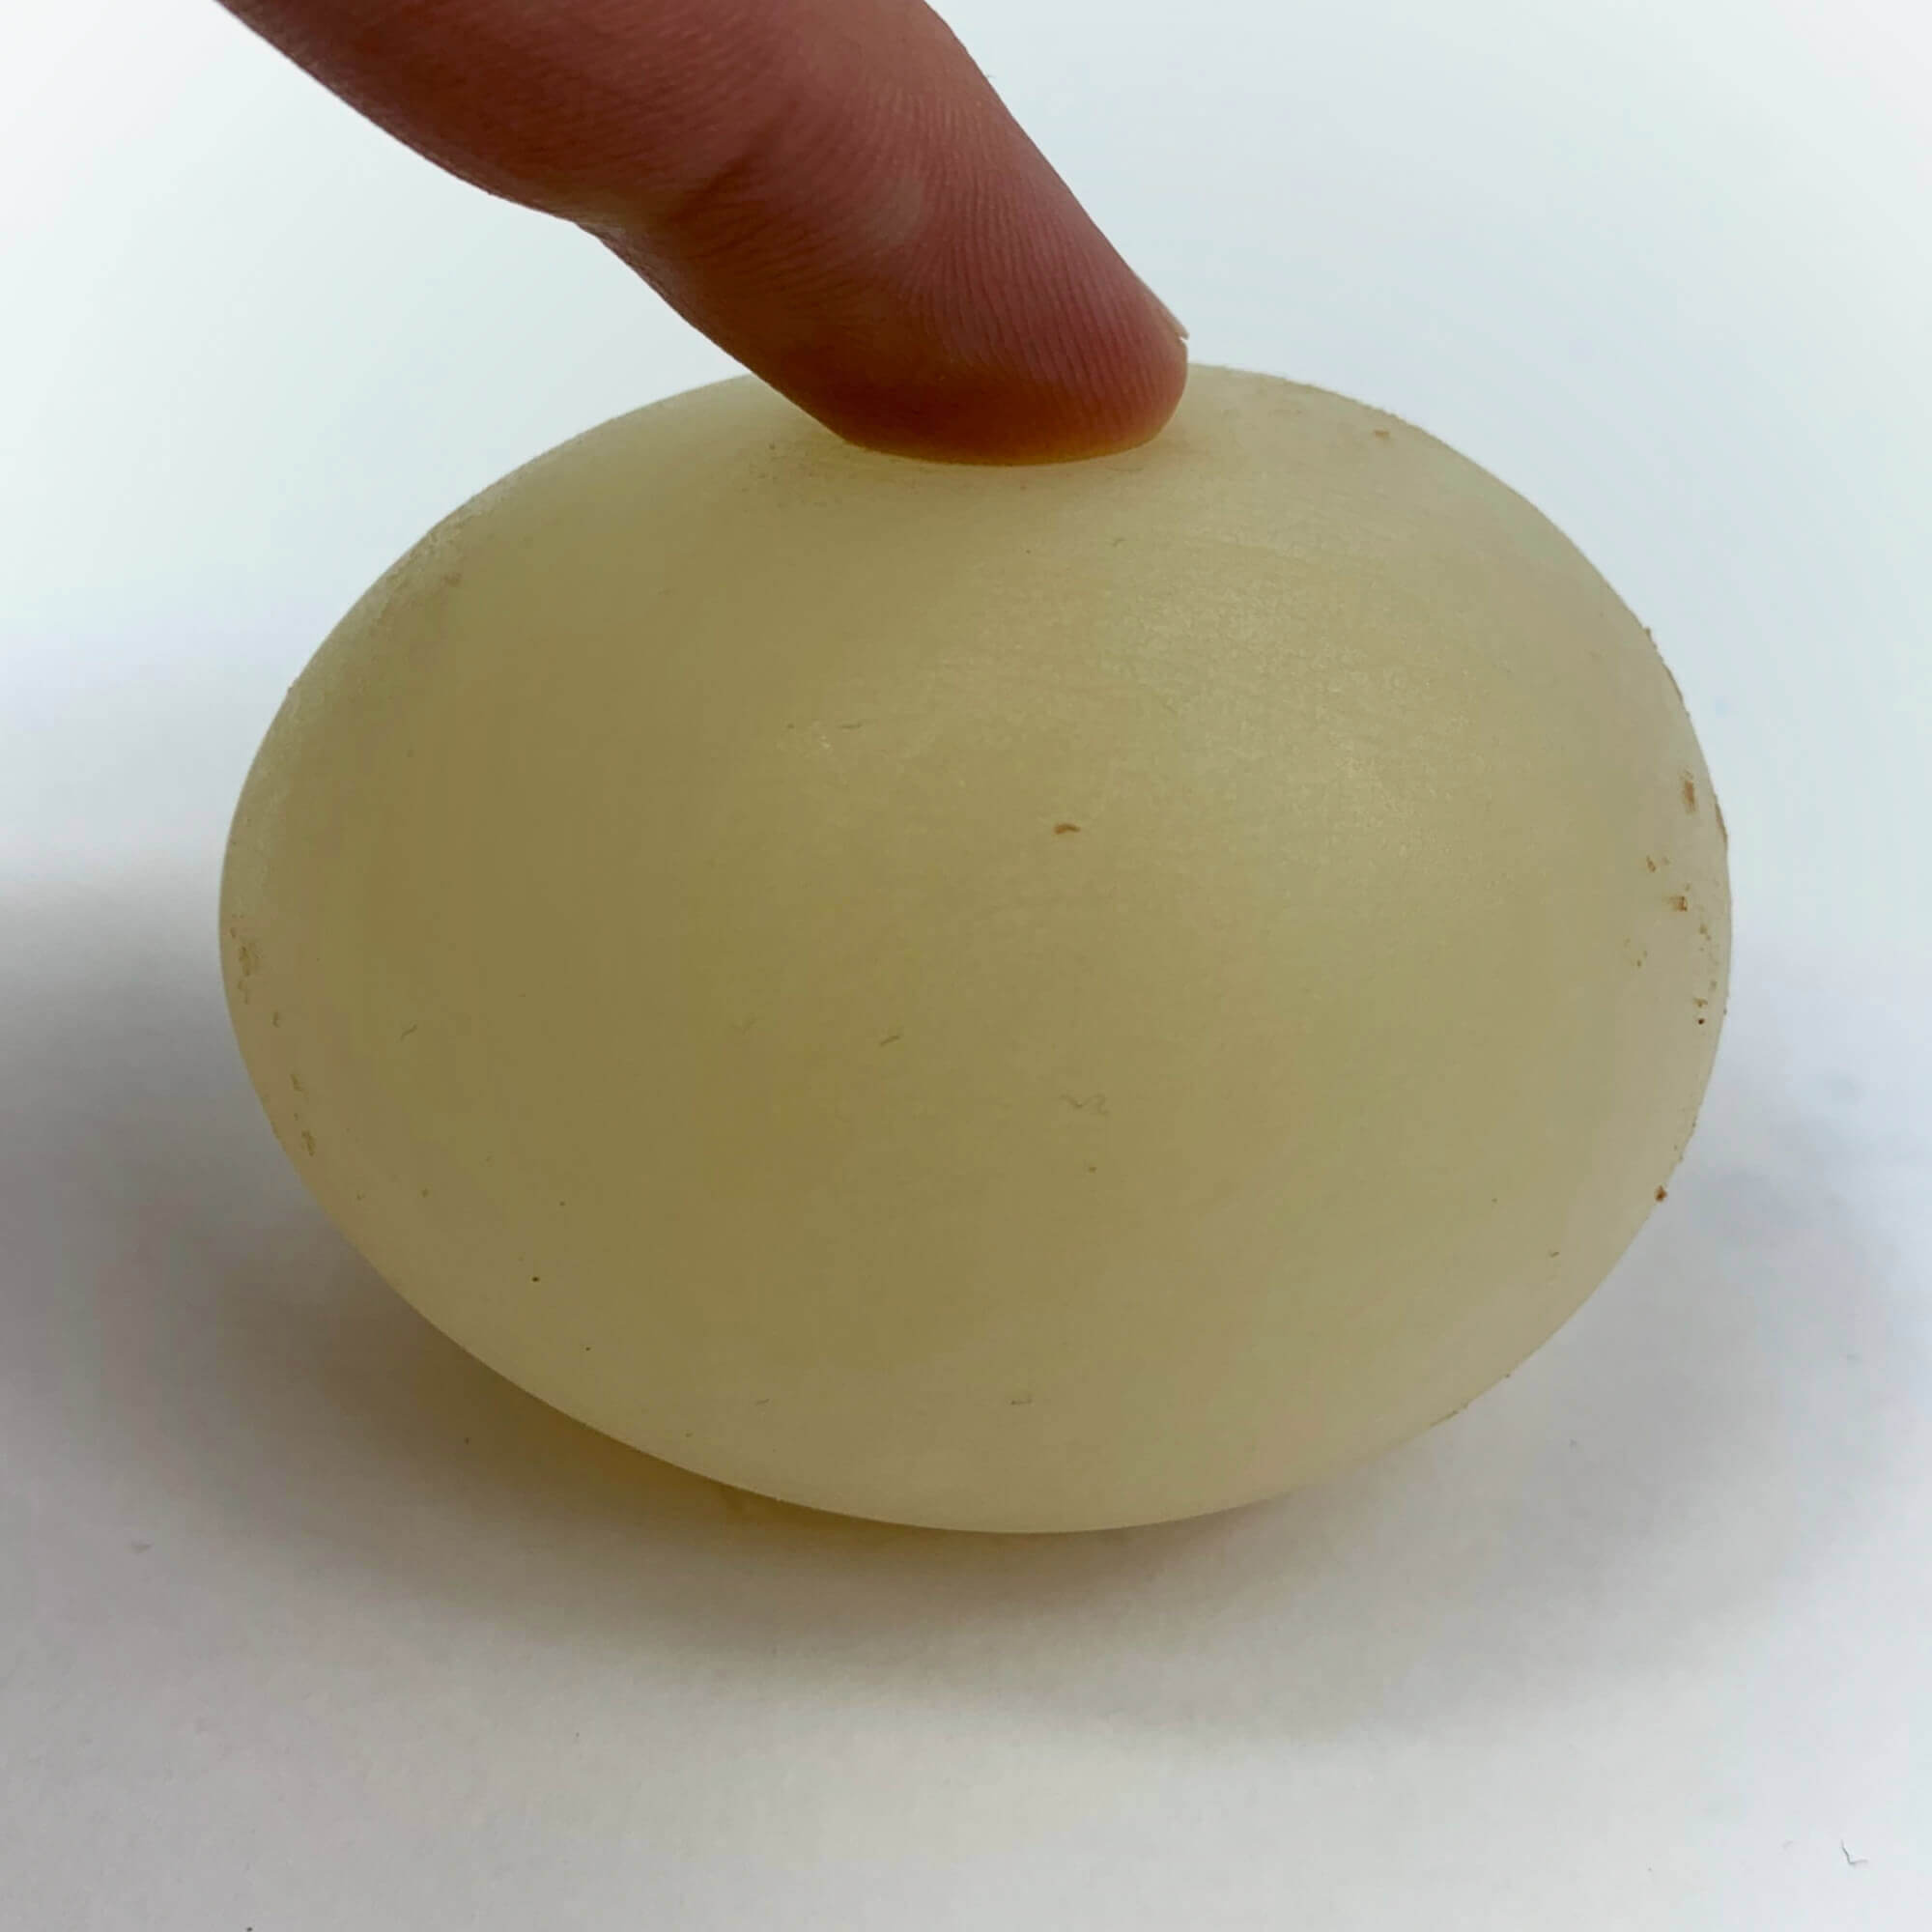 Squishy Egg